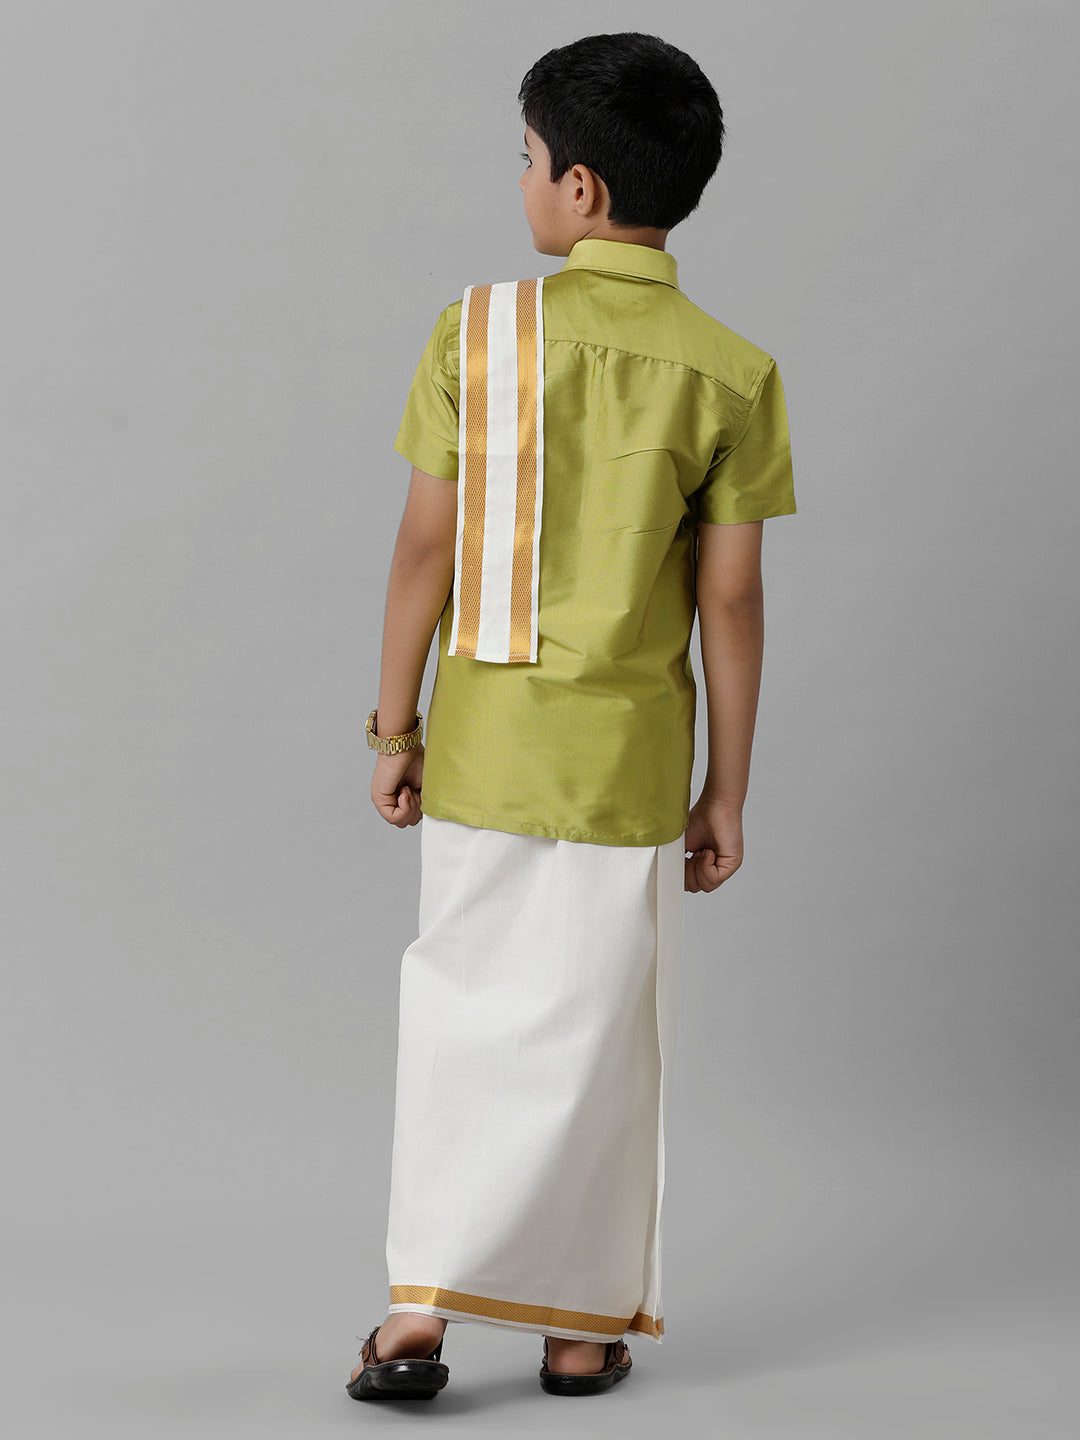 Boys Silk Cotton Lemon Green Half Sleeves Shirt with Adjustable Cream Dhoti Towel Combo K44-Back view